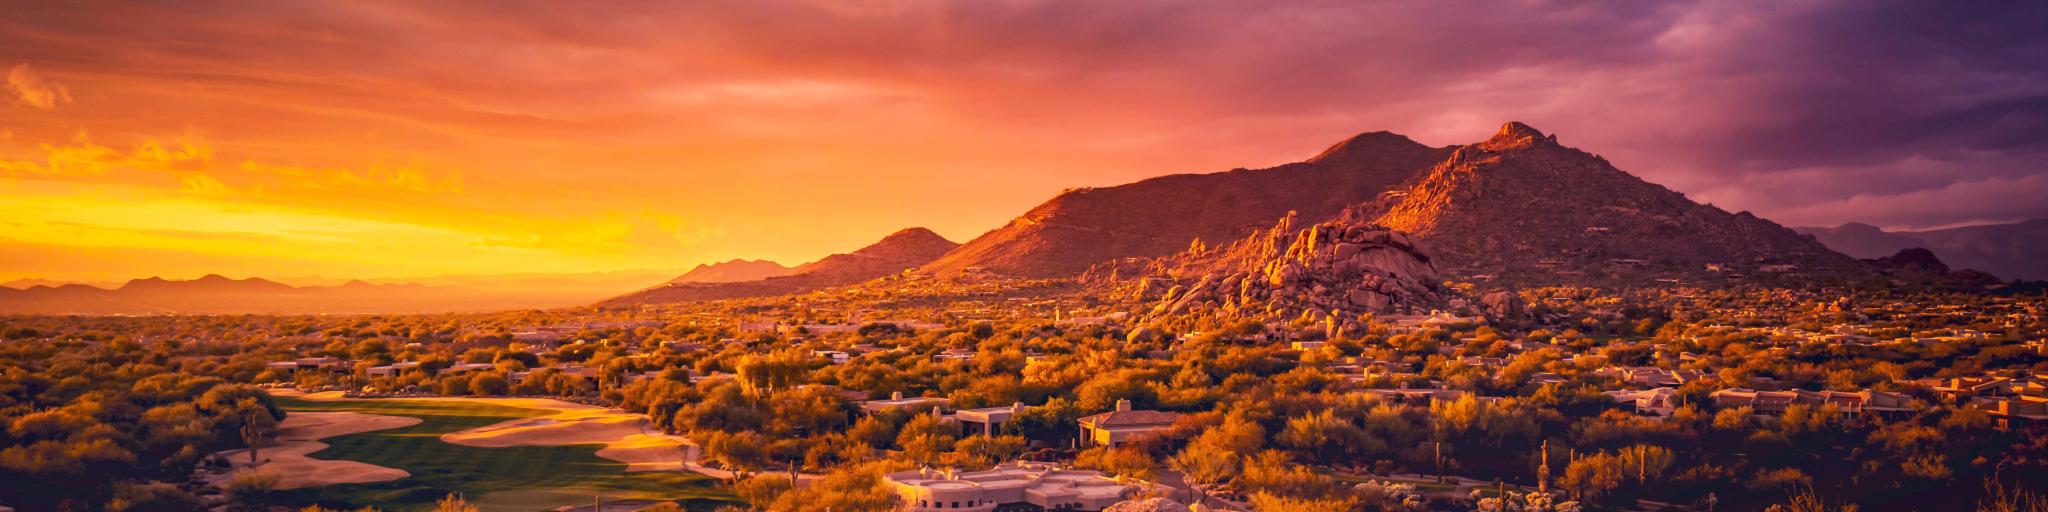 Arizona desert landscape at sunset